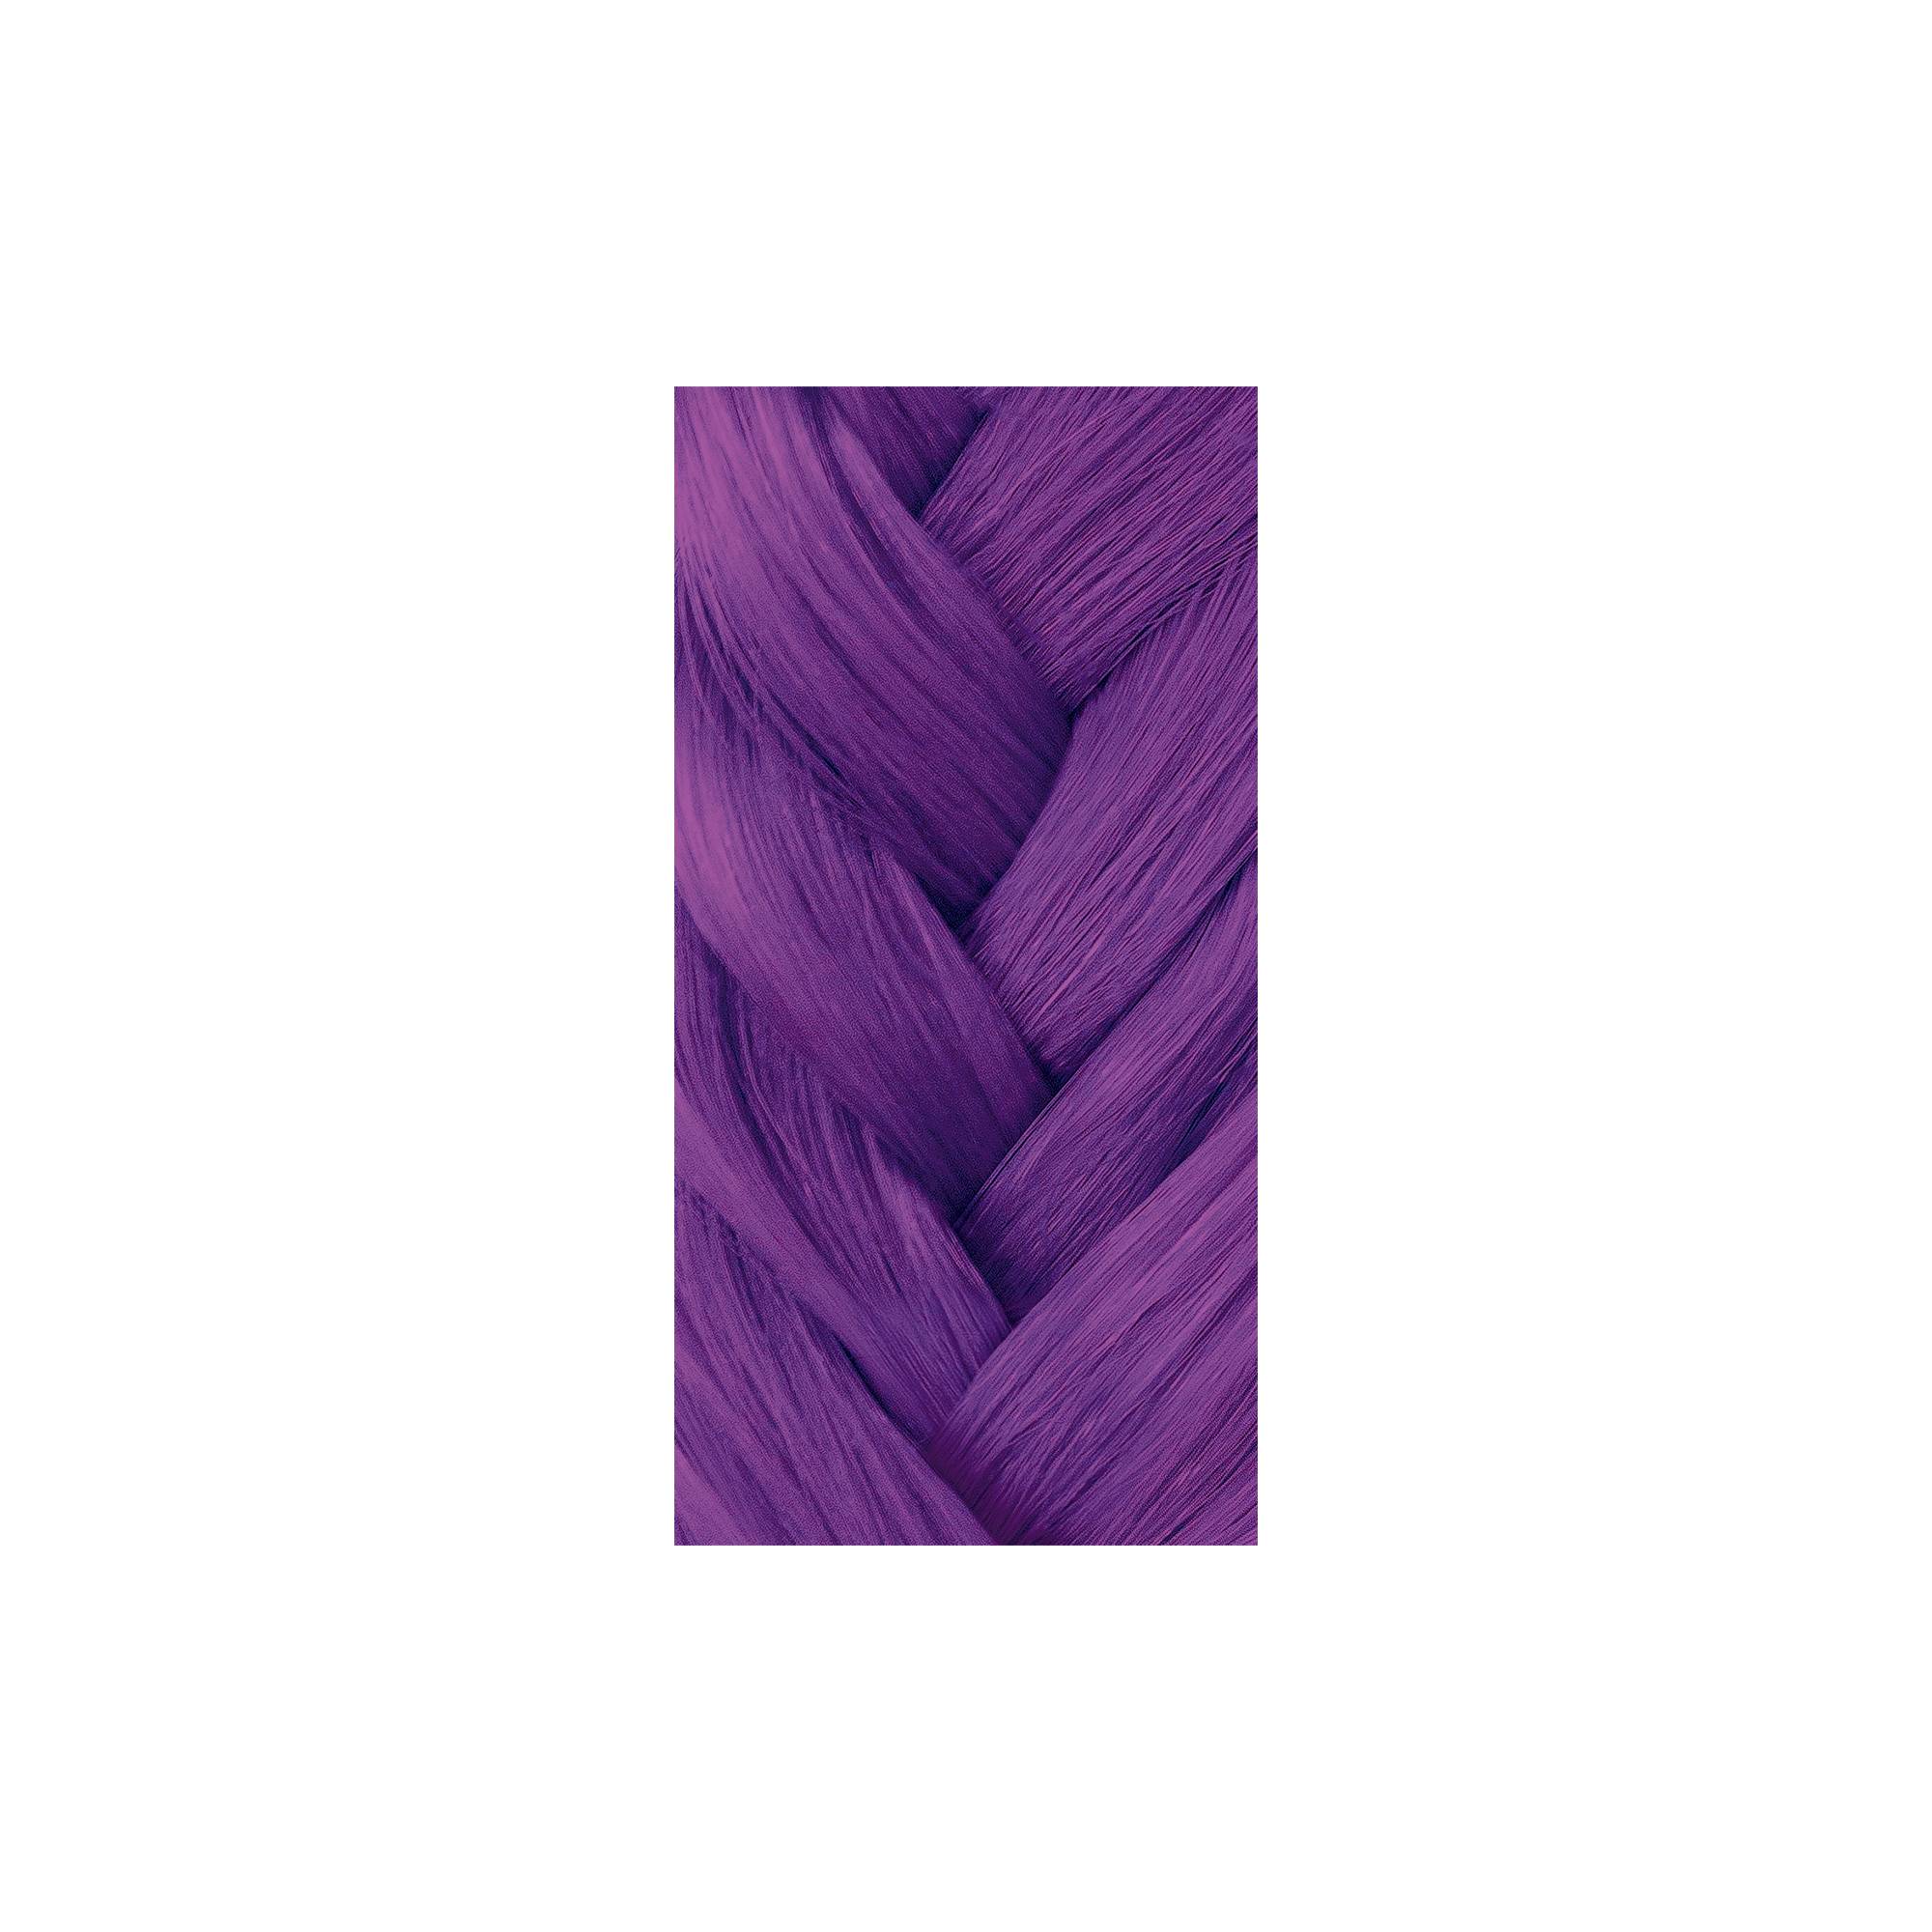 Coloration semi-permanente Masquerade - Violet pourpre de la marque Danger Jones Contenance 118ml - 4